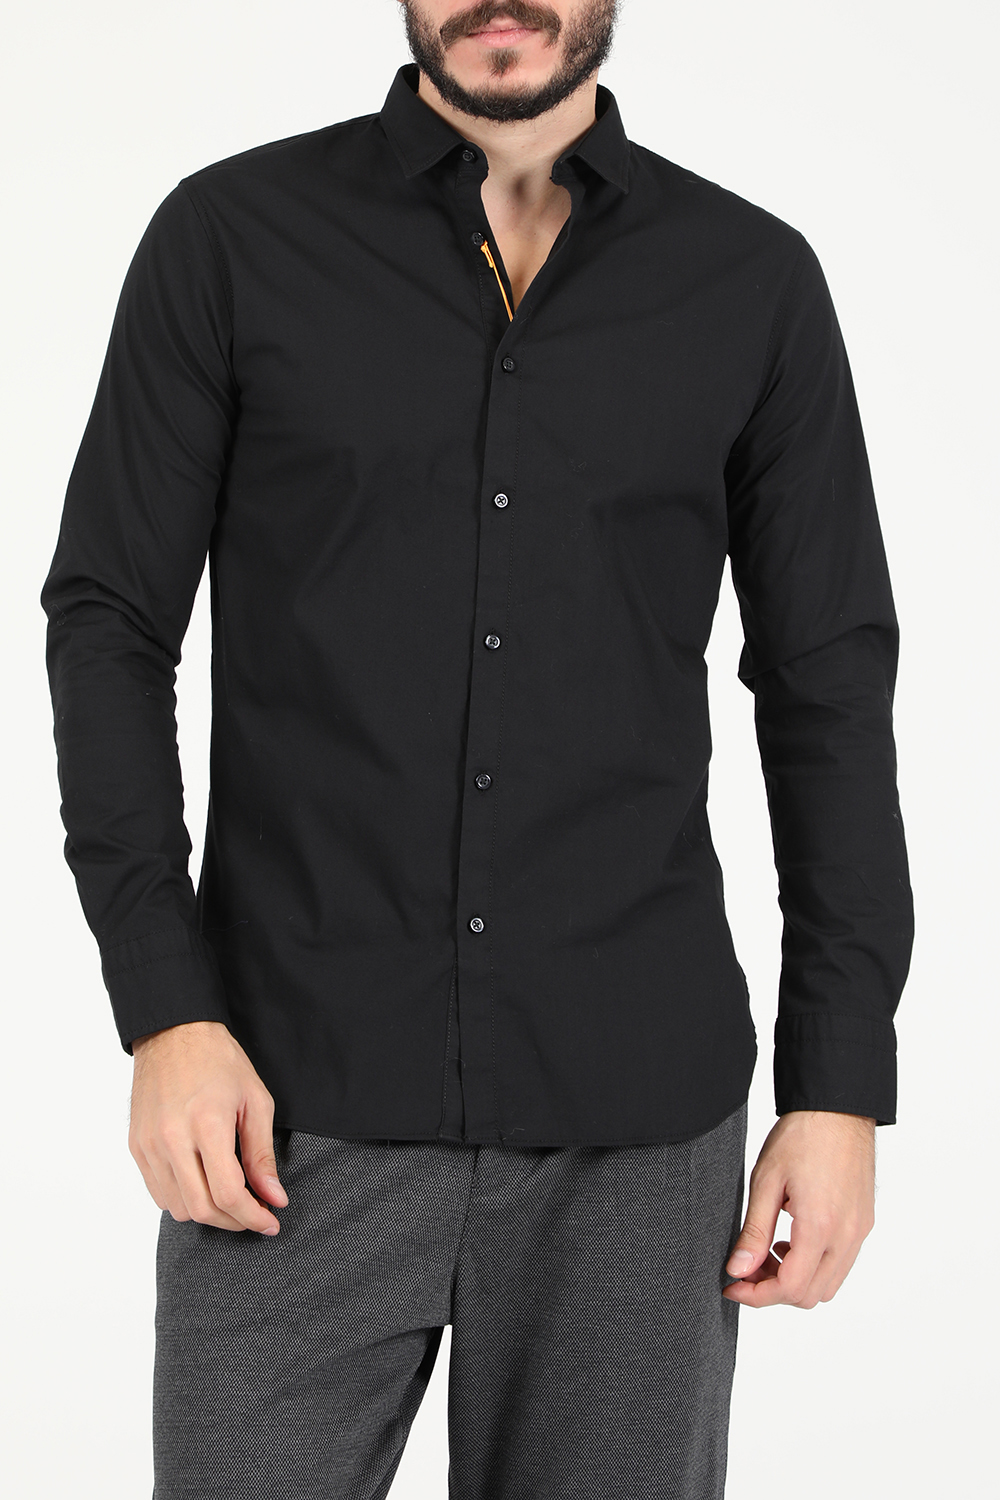 BOSS – Ανδρικό βαμβακερό πουκάμισο BOSS Mabsoot_1 μαύρο 1822567.0-7171